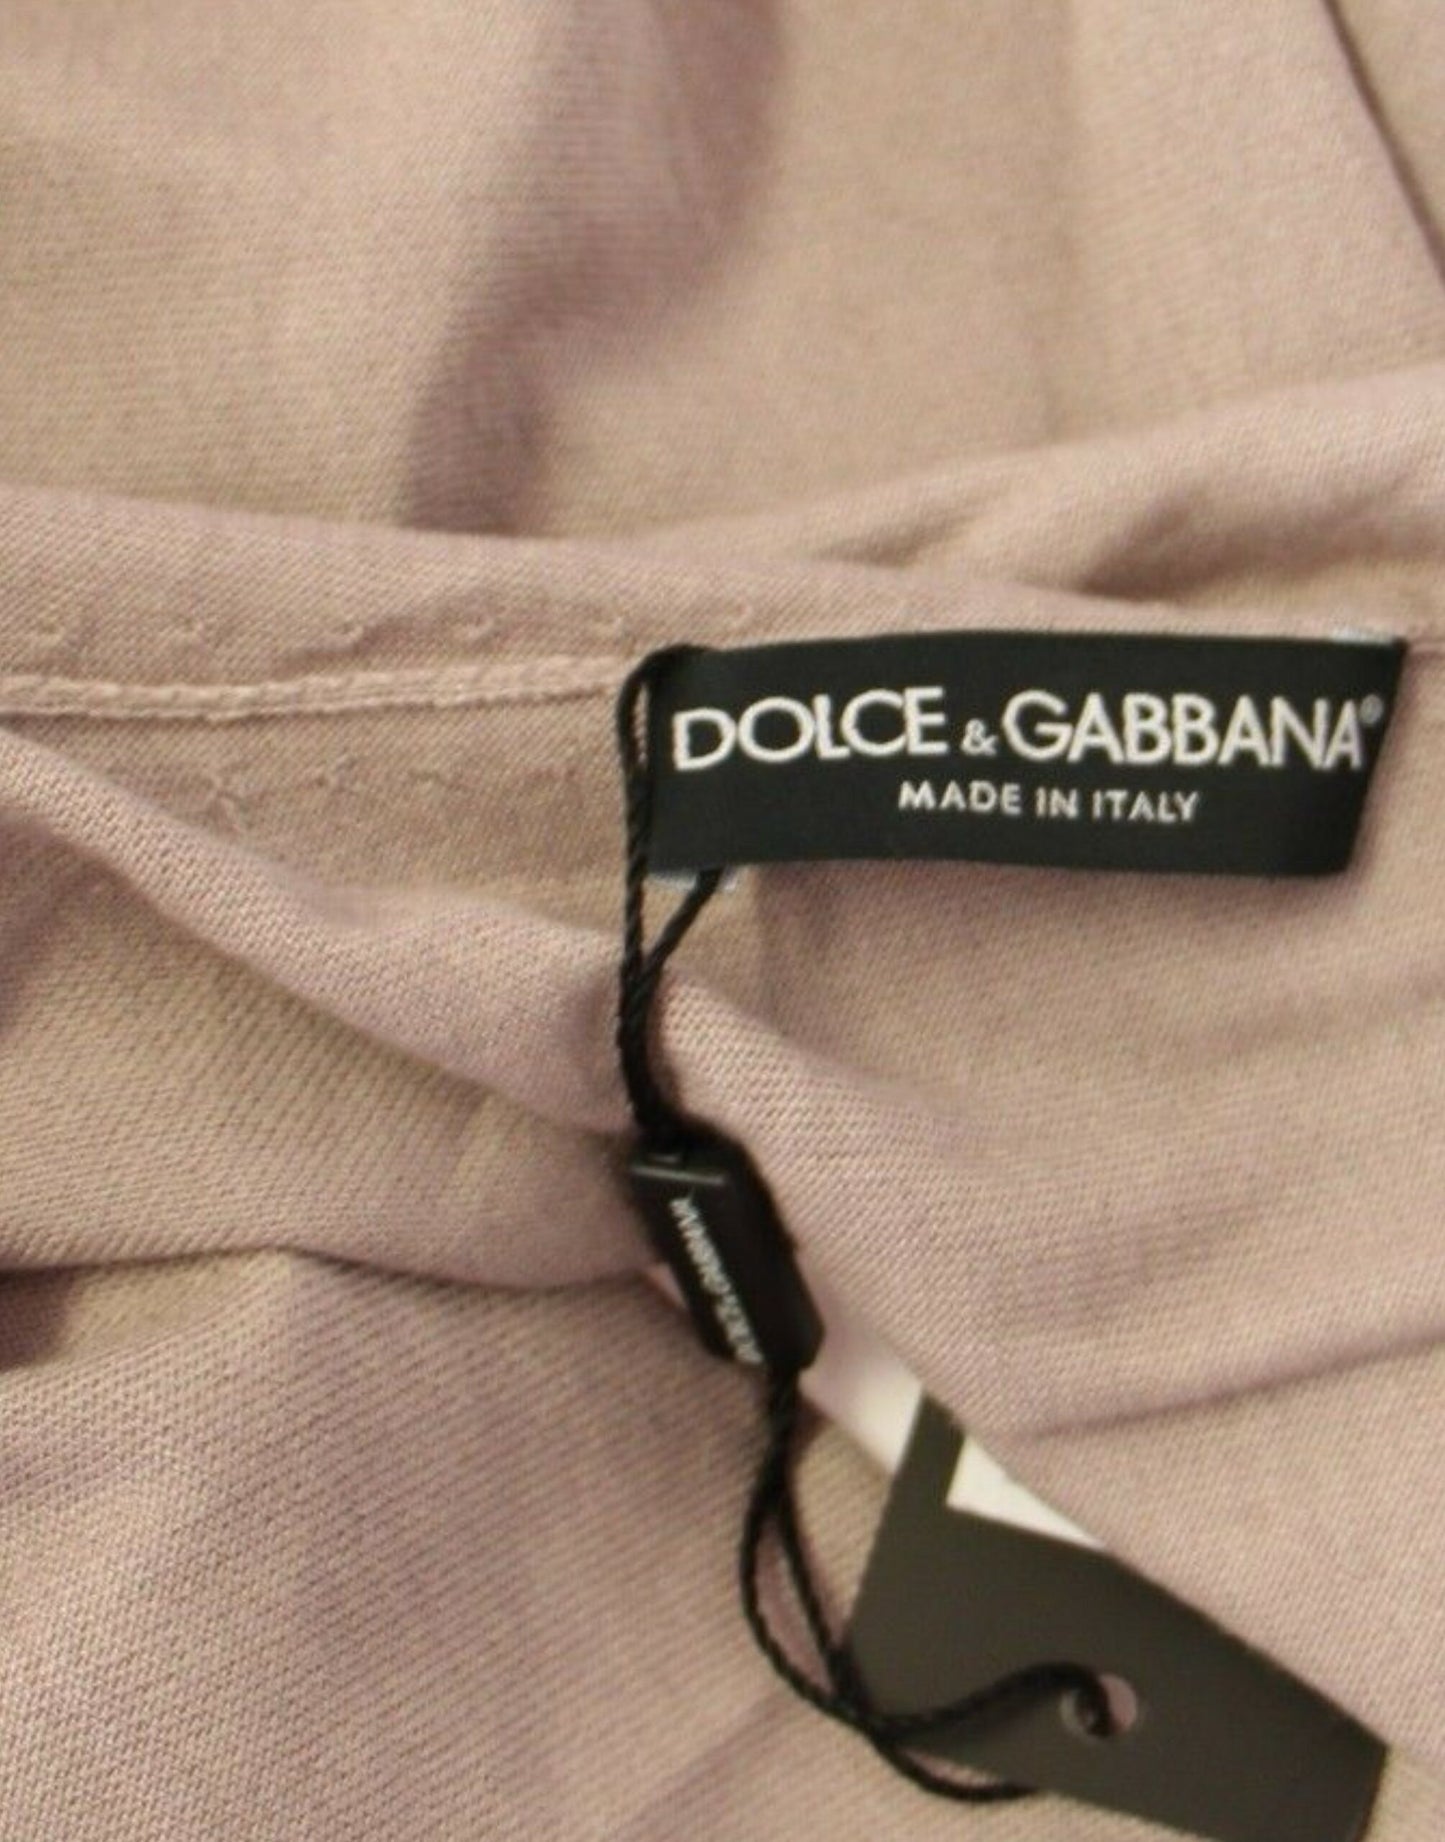 Dolce & Gabbana Elegant Cashmere-Silk Blend Light Knit Shrug